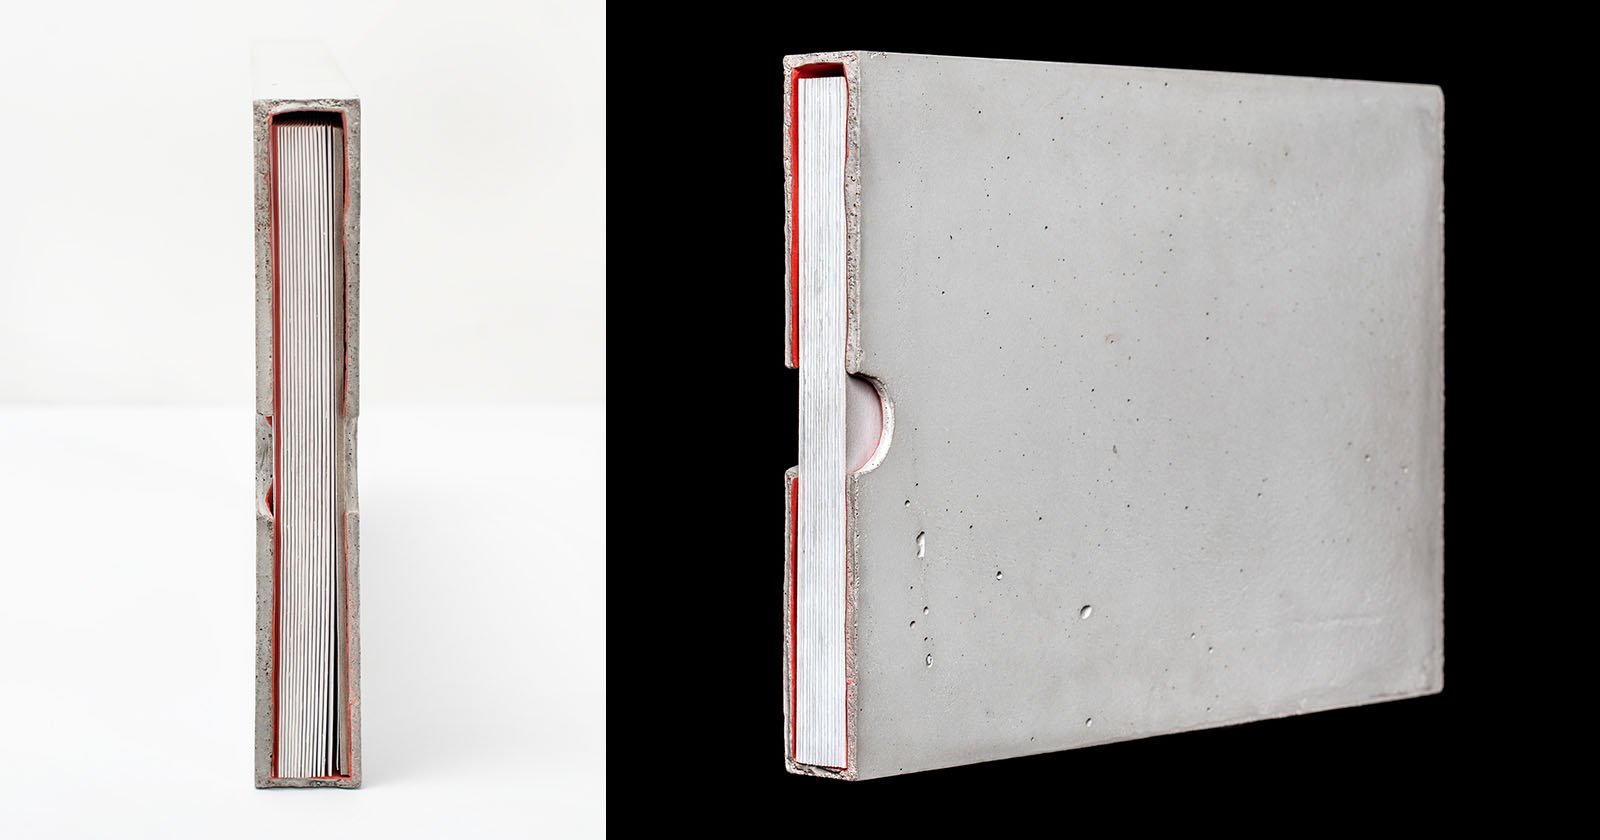 This Photo Book on Concrete Buildings Comes in a Concrete Slipcase